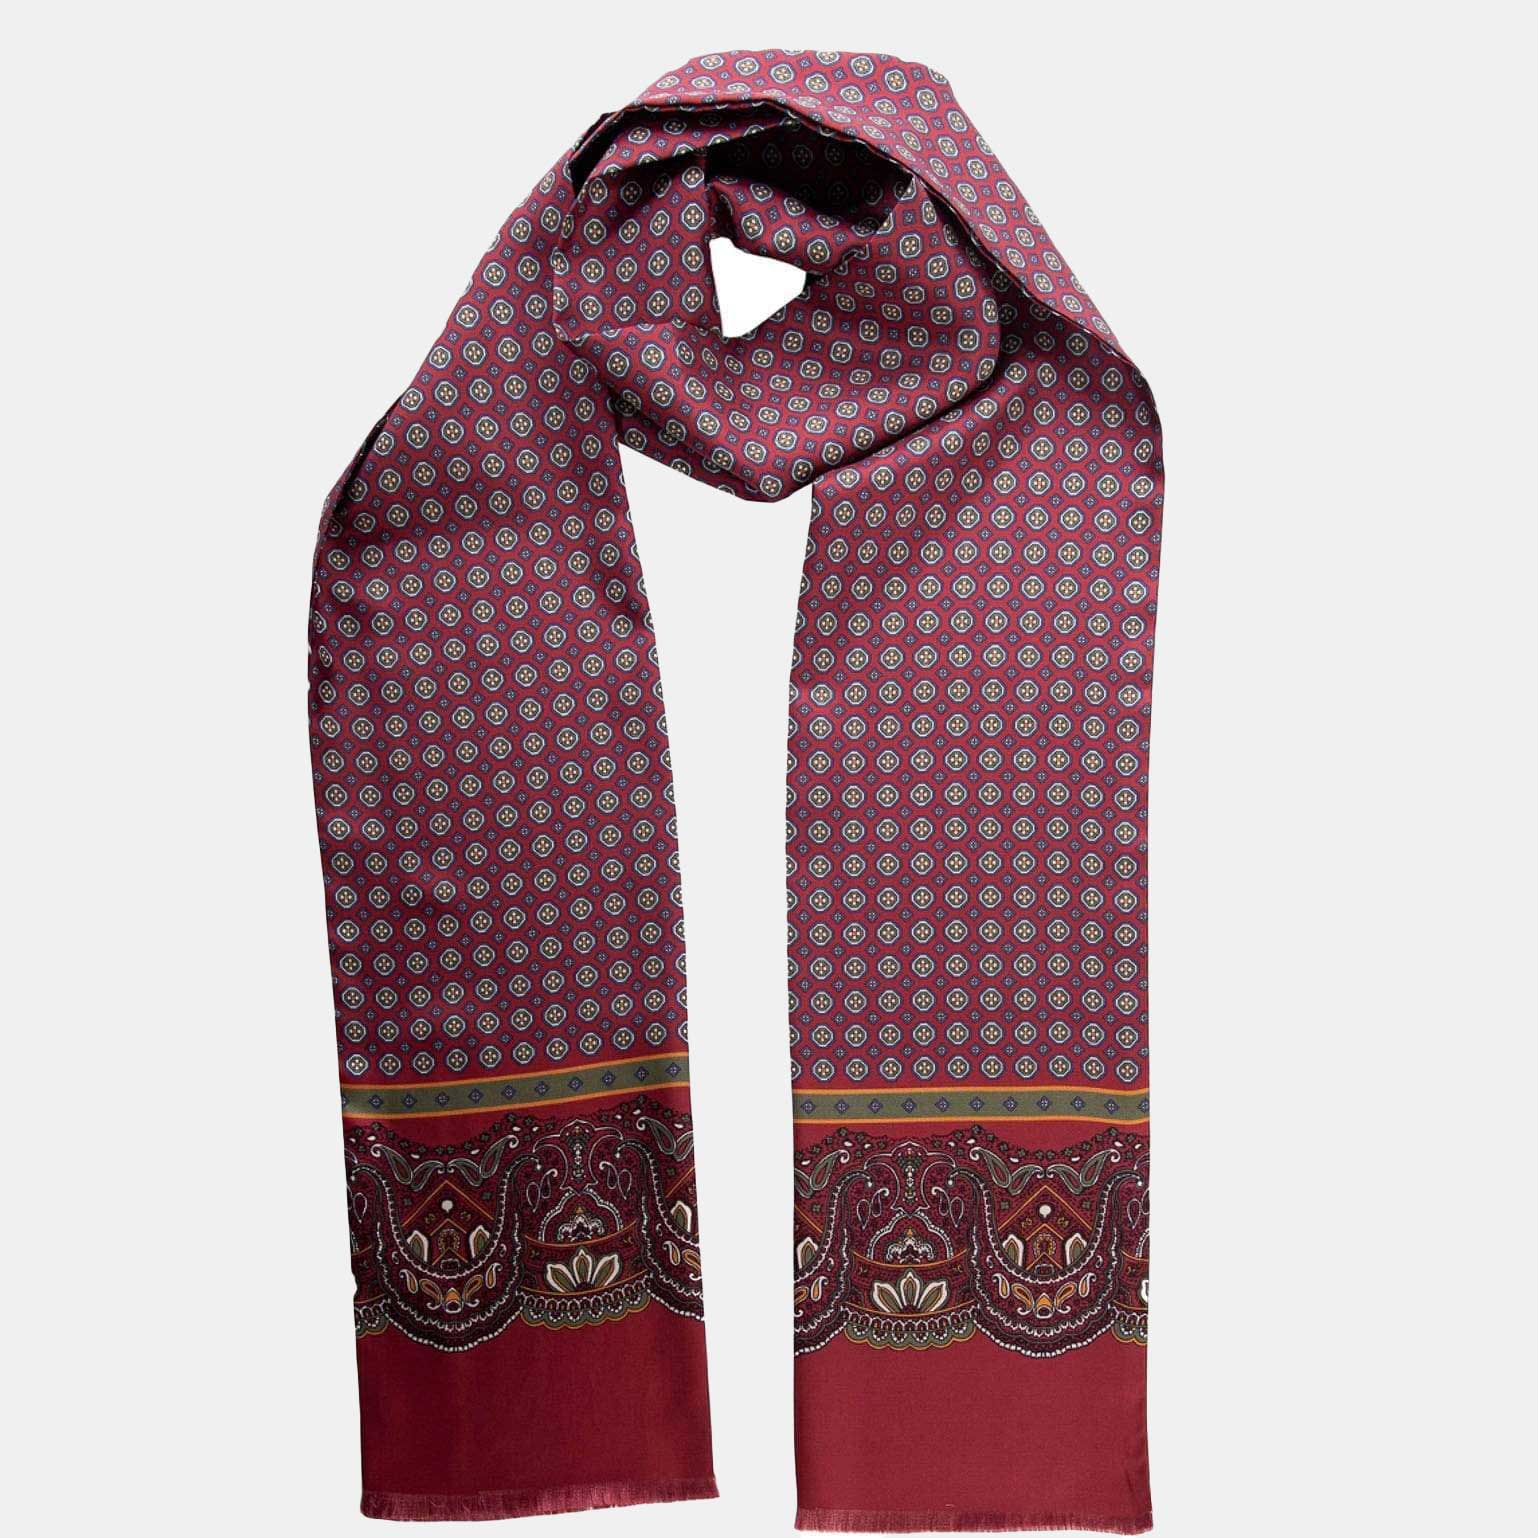 StclaircomoShops®, Men's Luxury Scarves / shawls